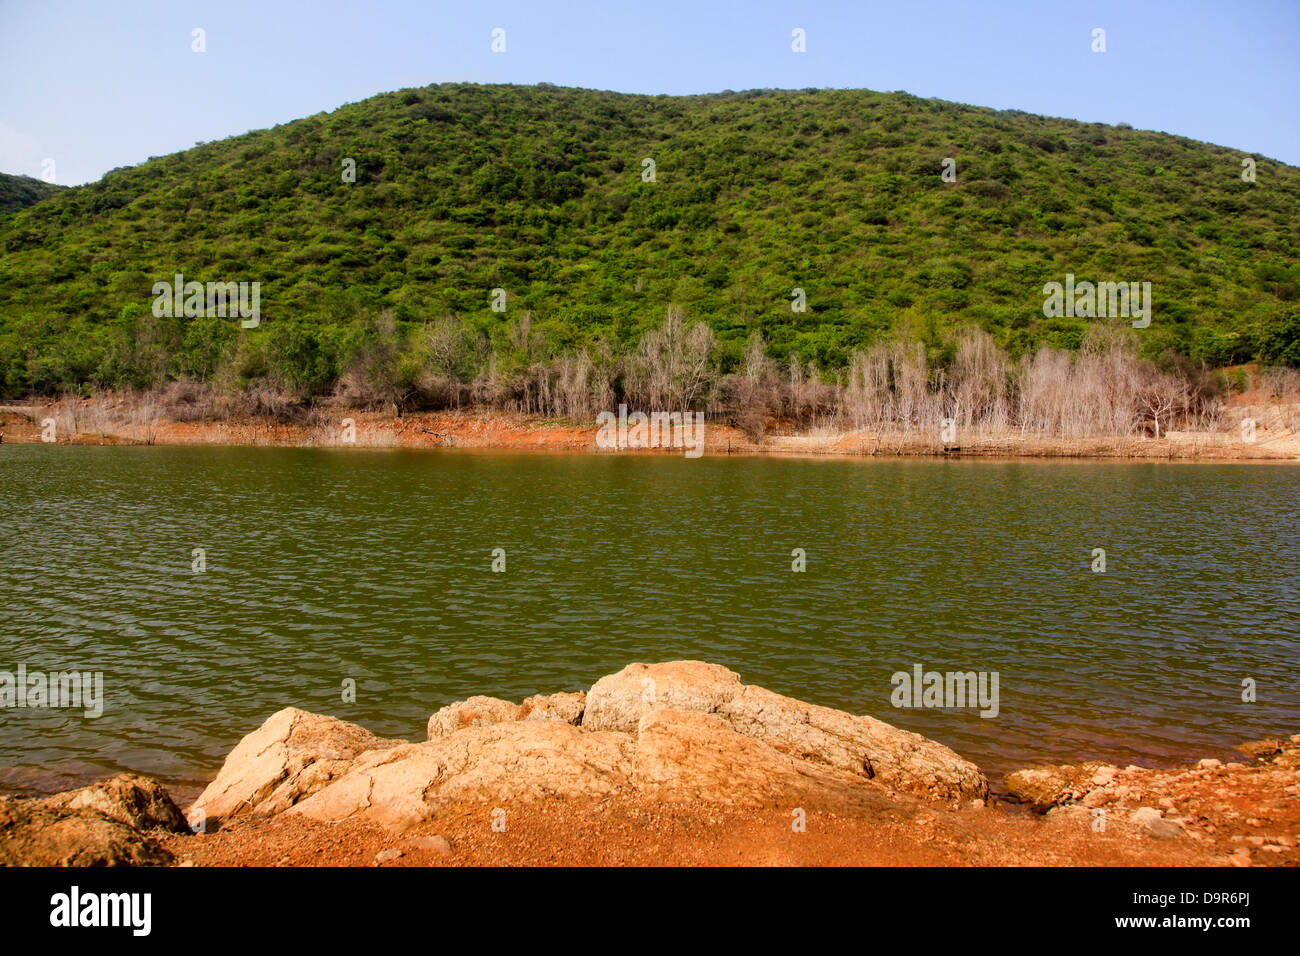 Lake in a park, Kambala Konda Eco Tourism Park (Majjisrinath), Visakhapatnam, Andhra Pradesh, India Stock Photo